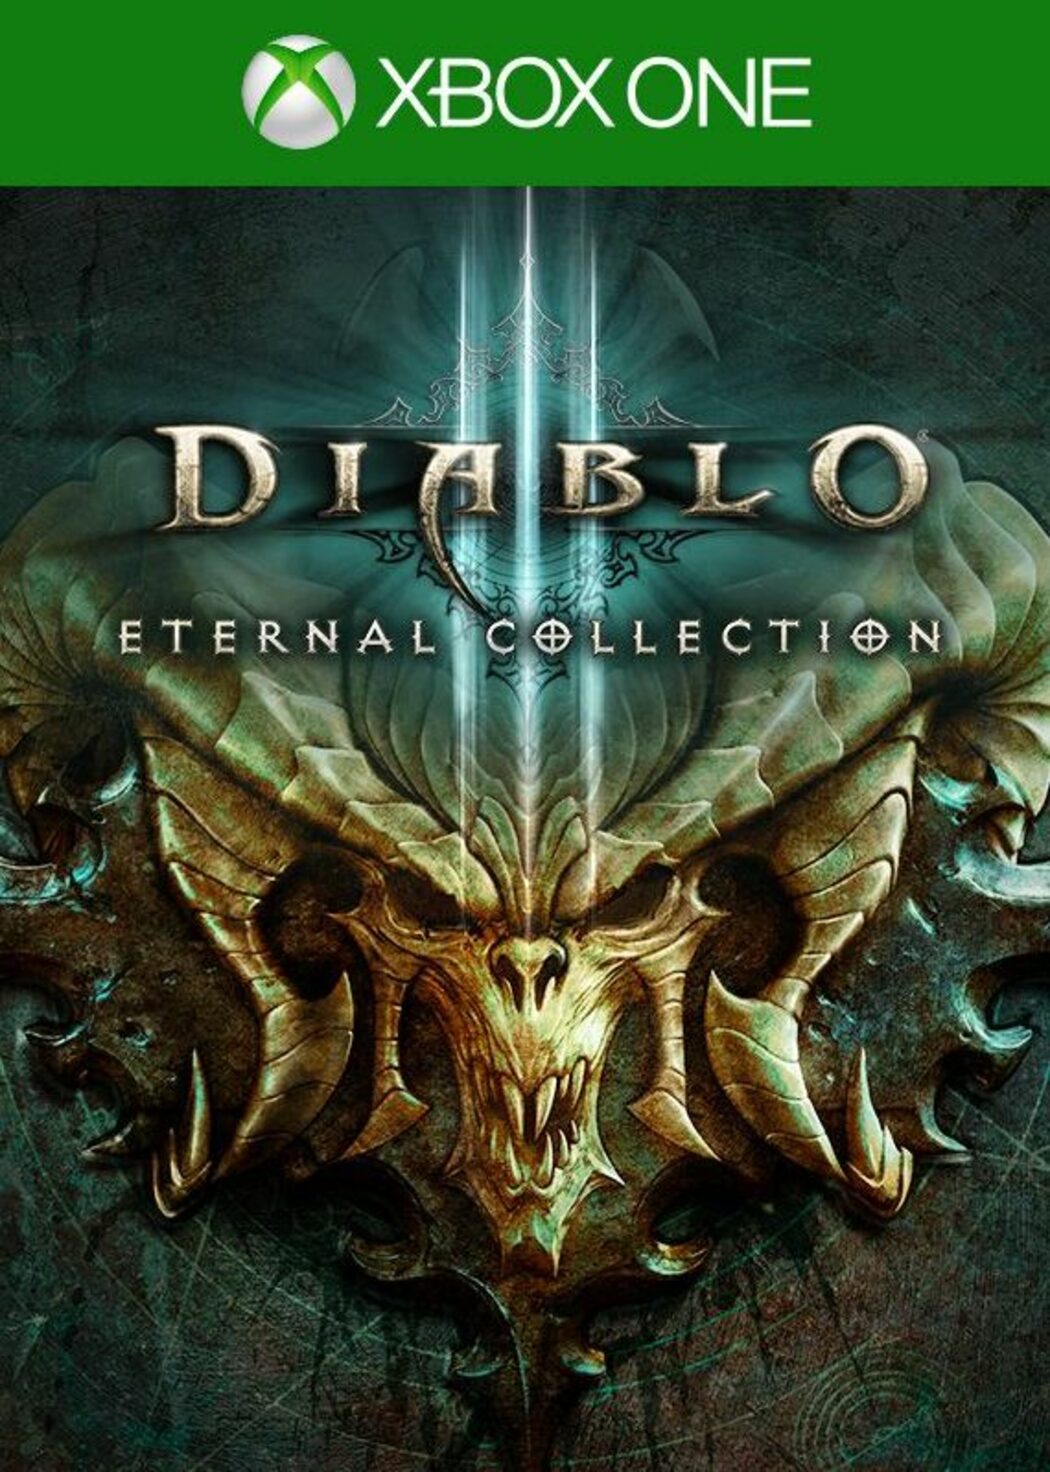 Como Comprar no Eneba Jogos de Xbox da Argetina e Turquia Comprando Diablo  2 e 3 na prática 